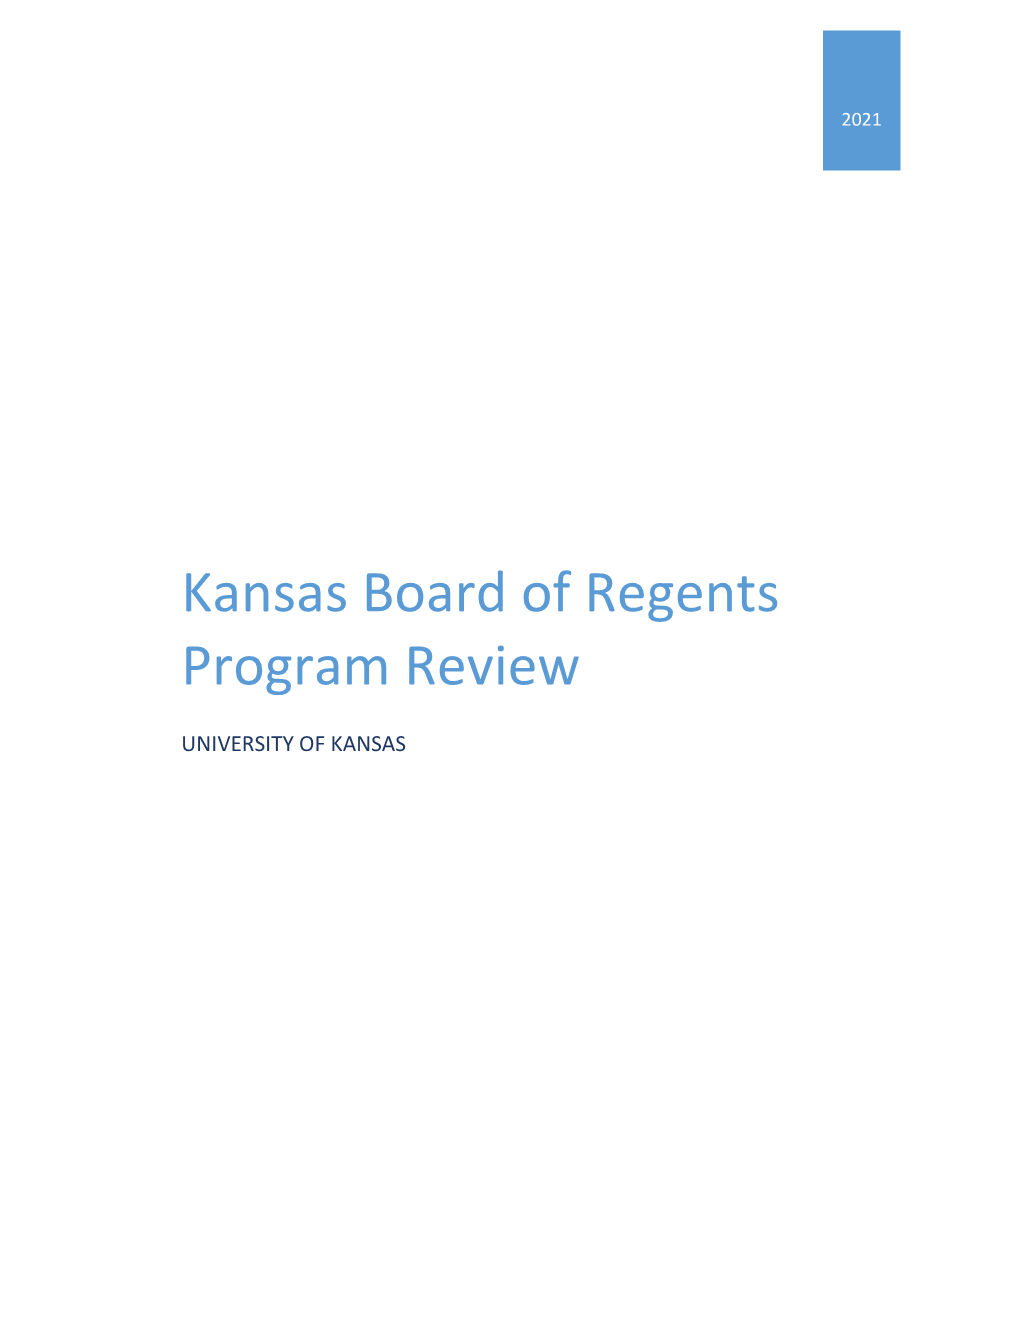 Kansas Board of Regents Program Review